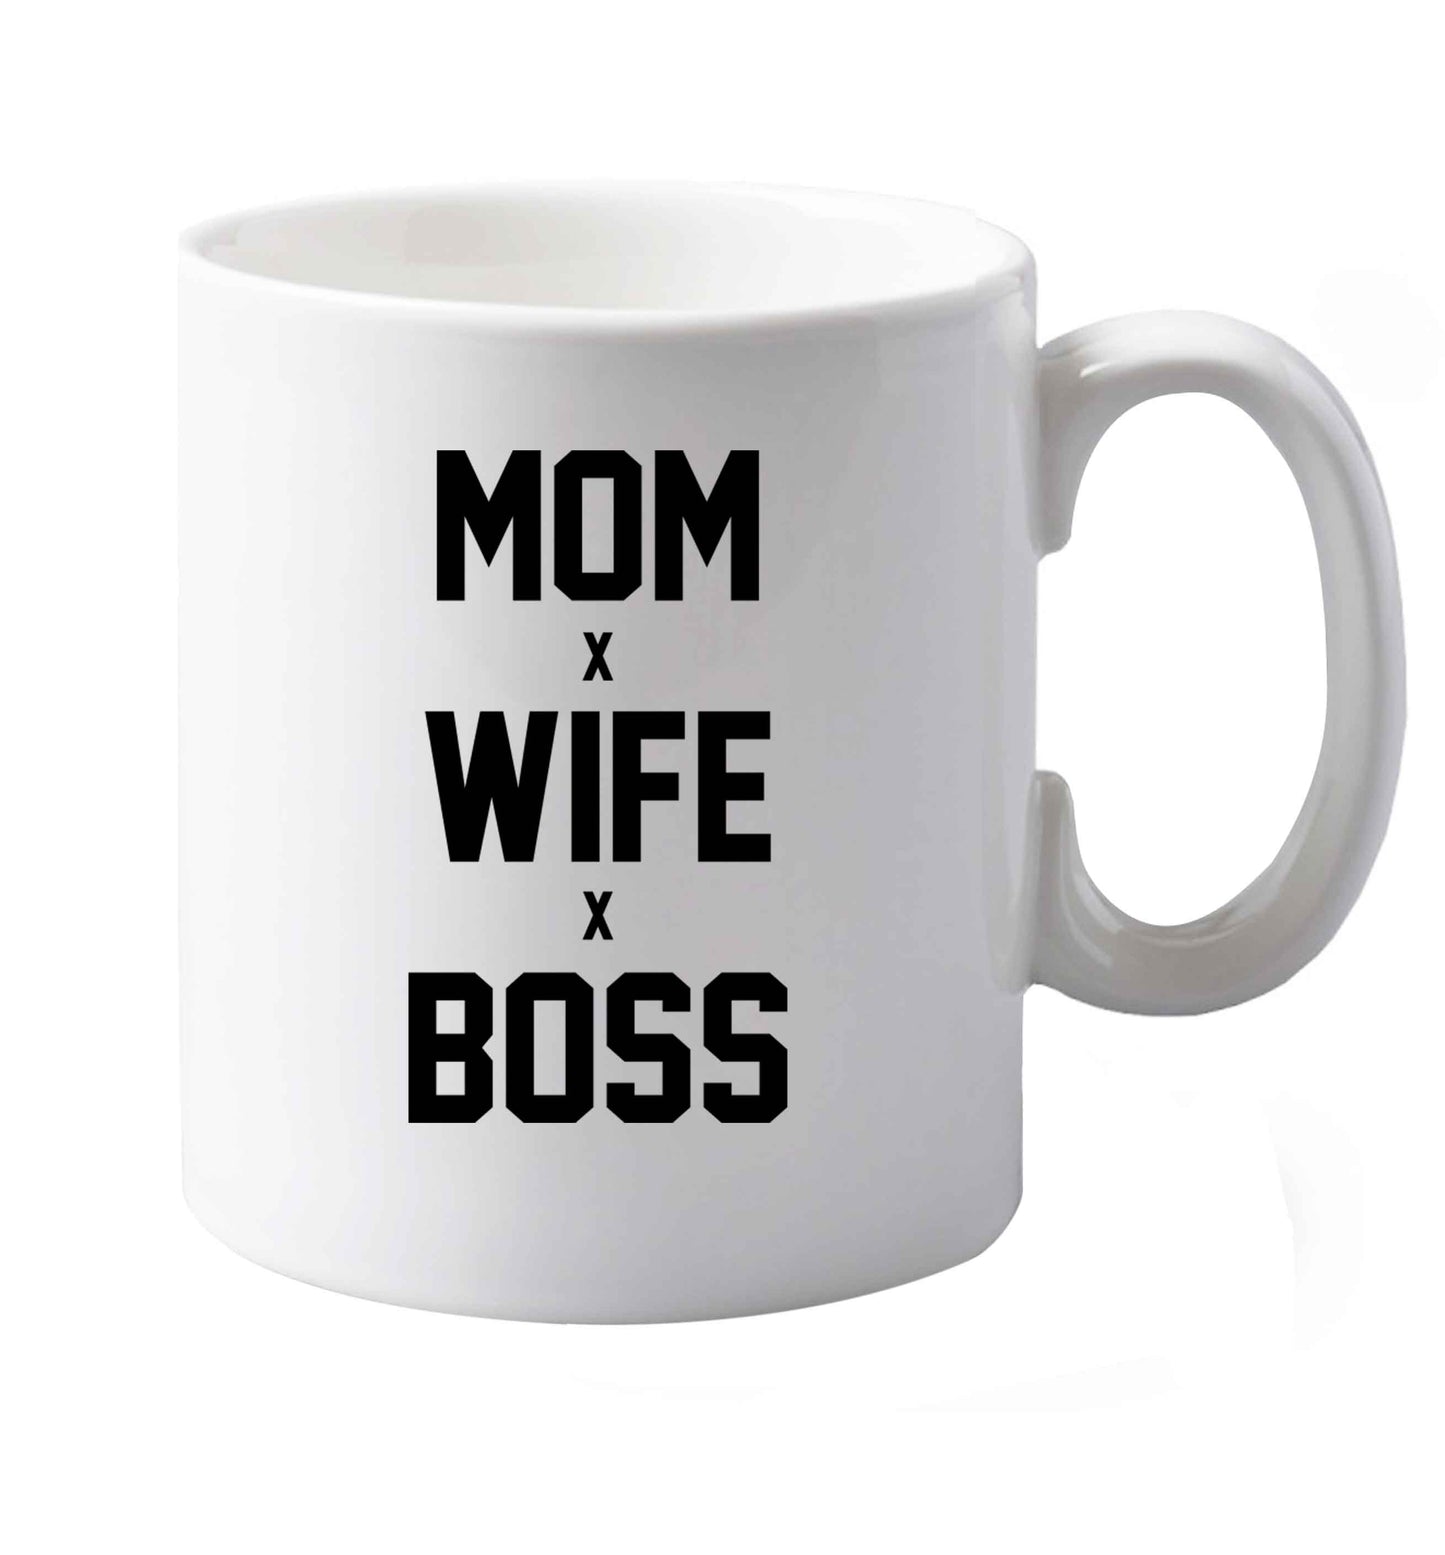 10 oz Mum wife boss ceramic mug both sides